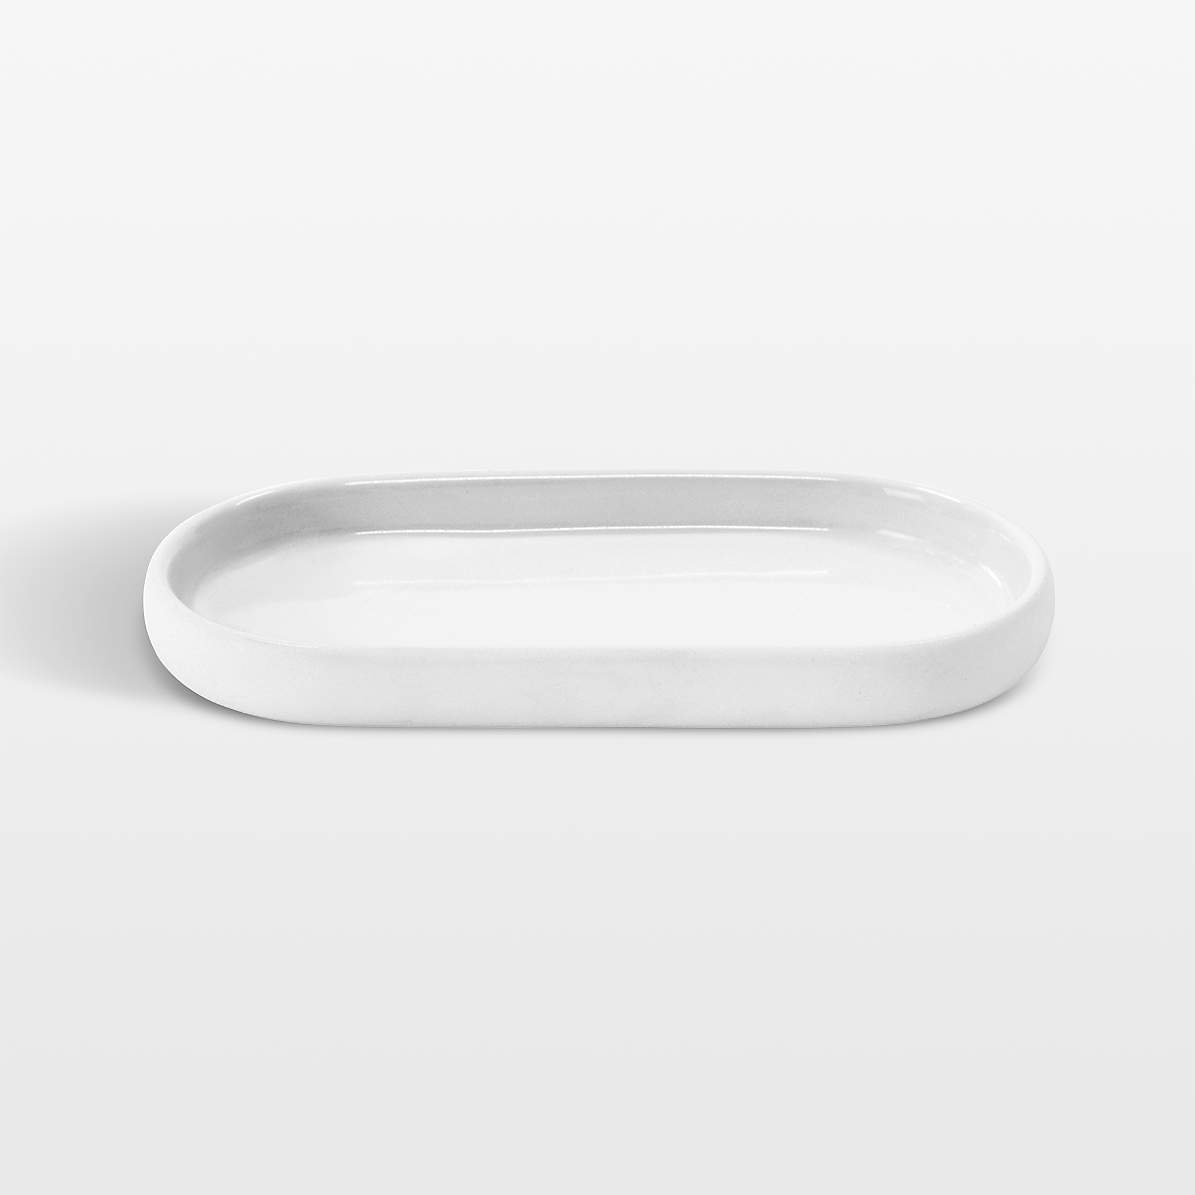 Blomus SONO Ceramic White Oval Bathroom Tray